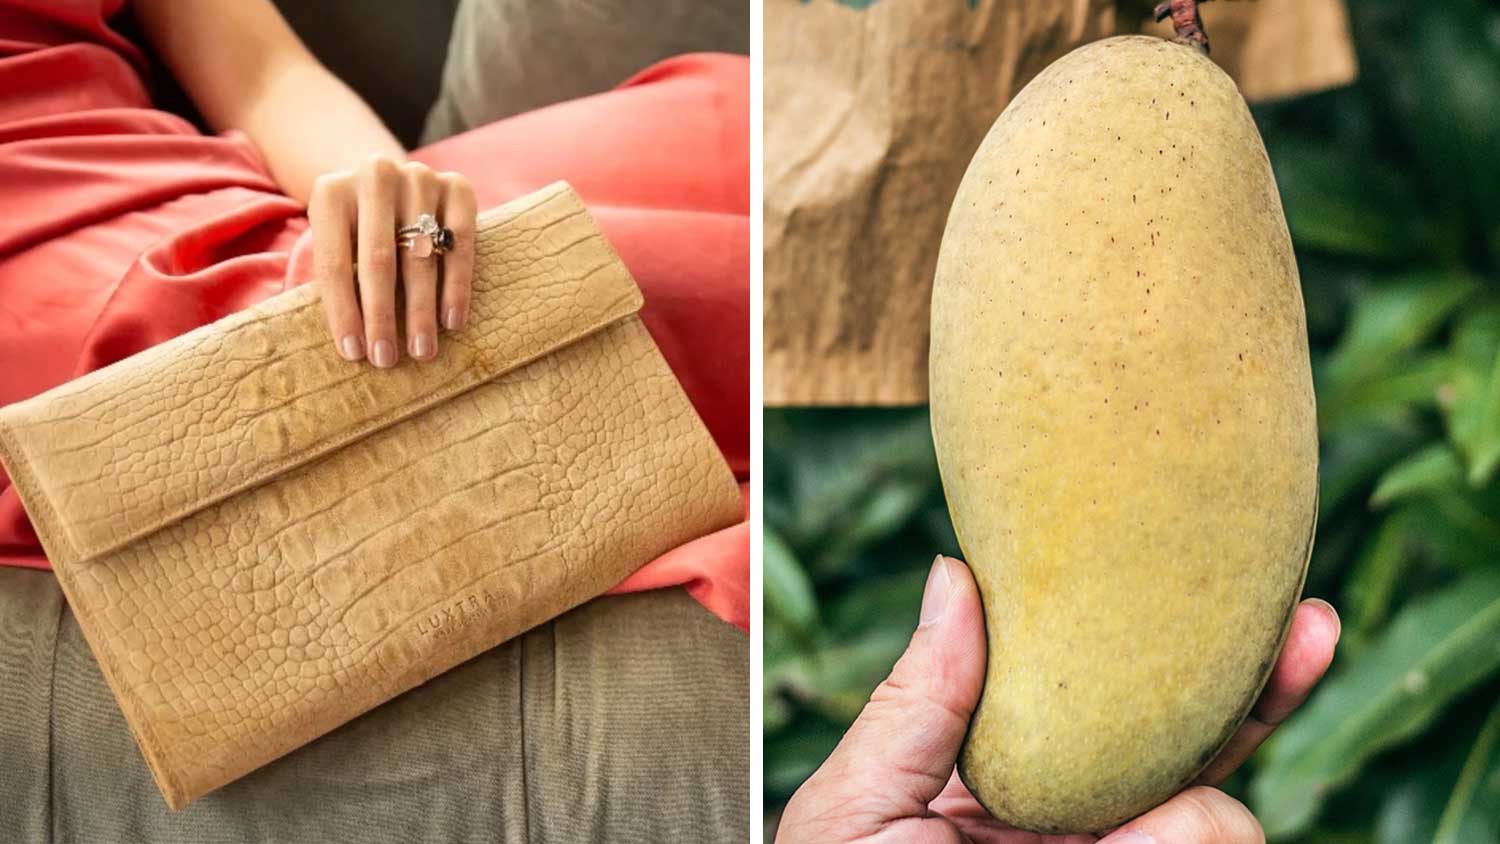 Buy Mango Women Bags Online | lazada.sg